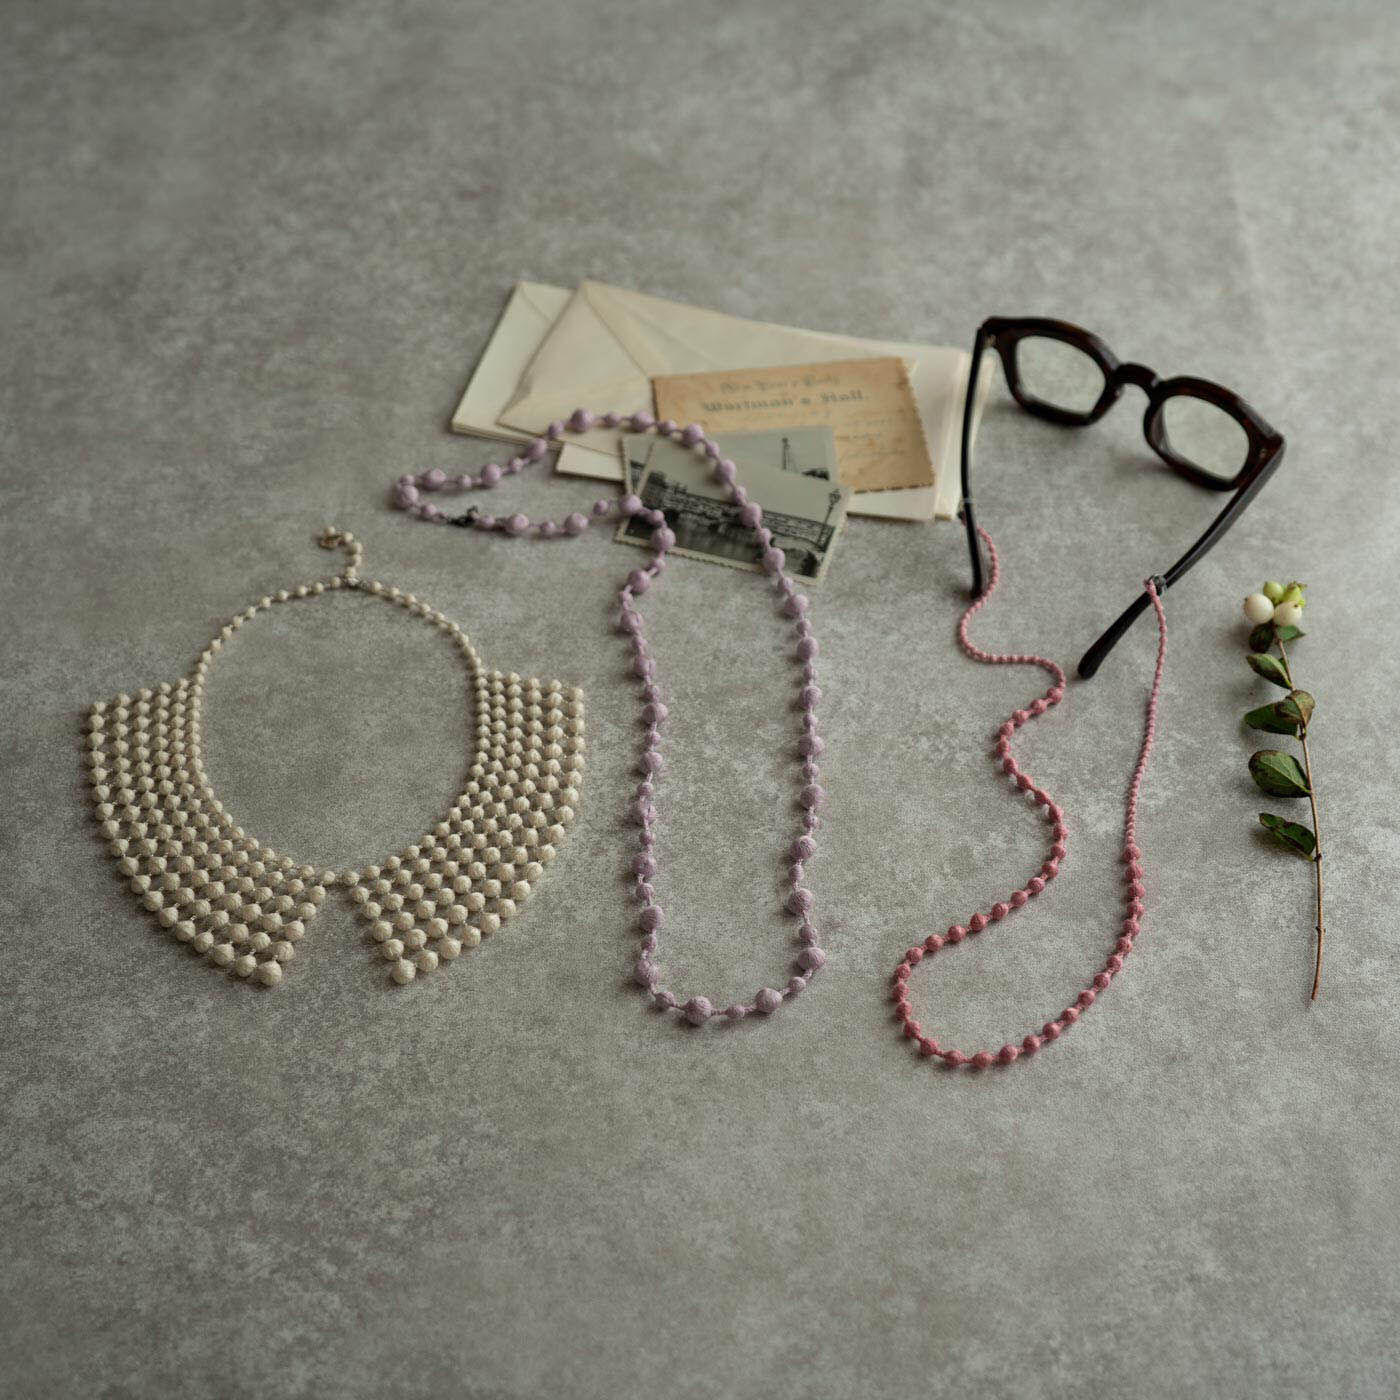 ＆Stories|群馬の刺繍工房が作った 糸の宝石のグラスコード〈ミスティーピンク〉|日本職人プロジェクトでは初登場の〈000 /トリプル・オゥ〉の美しい糸の宝石たち。あなたをいっそう輝かせる逸品を是非見つけてみて。